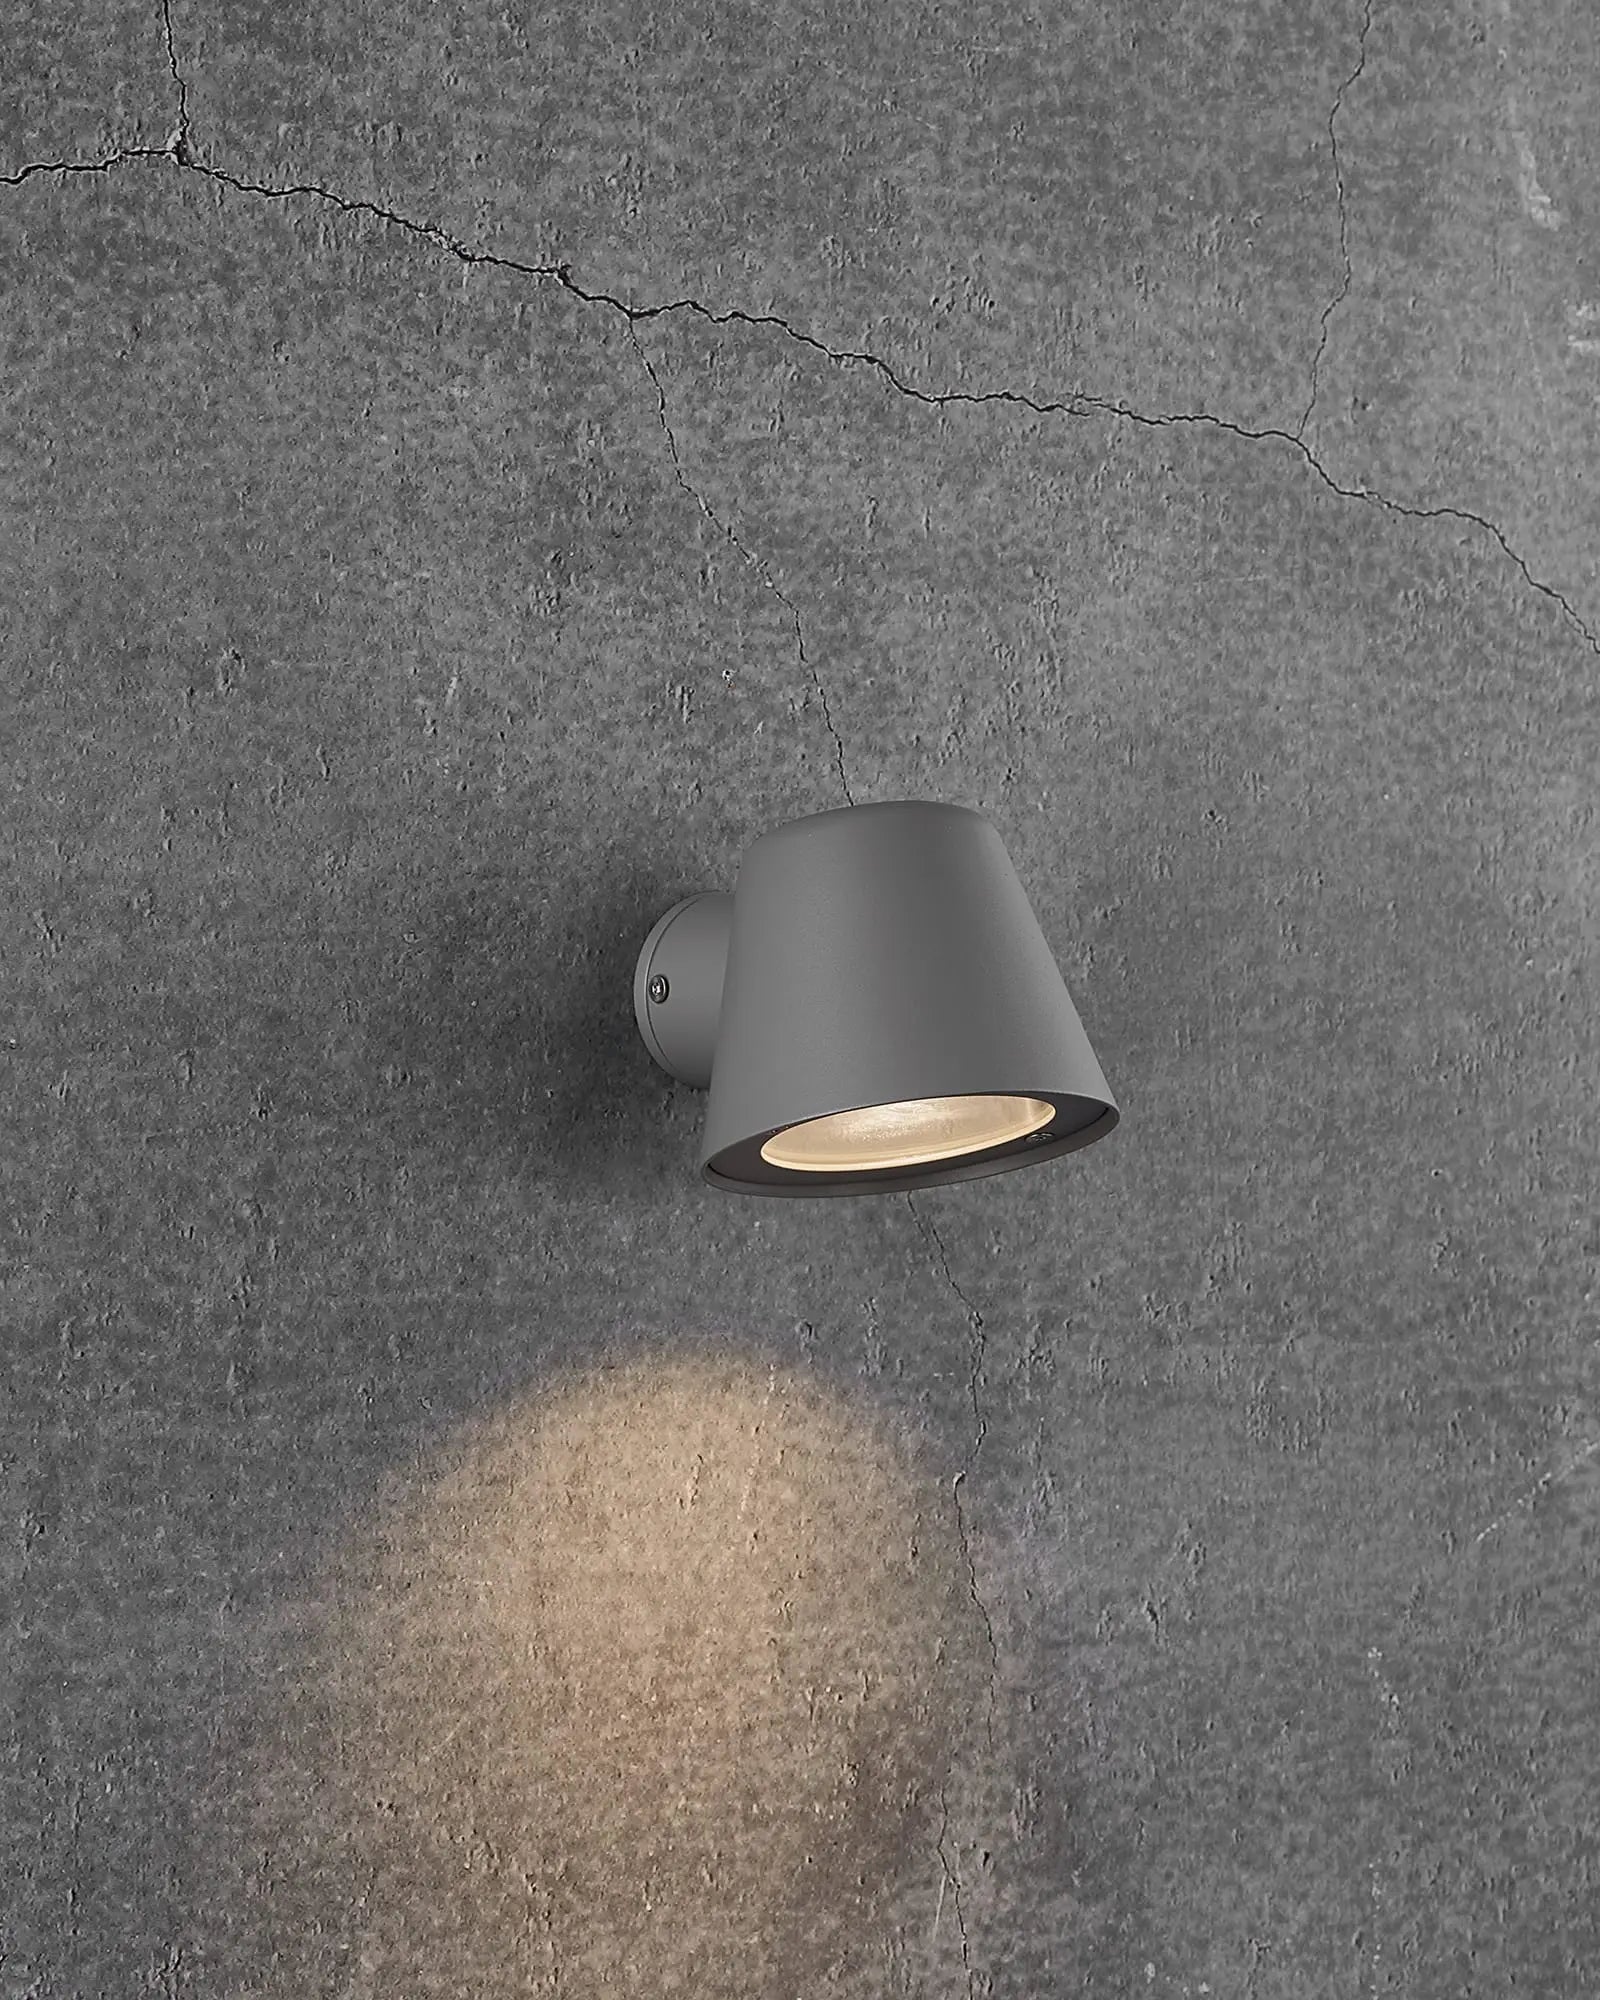 Aleria minimalistic Scandinavian Outdoor wall light on concrete wall in grey